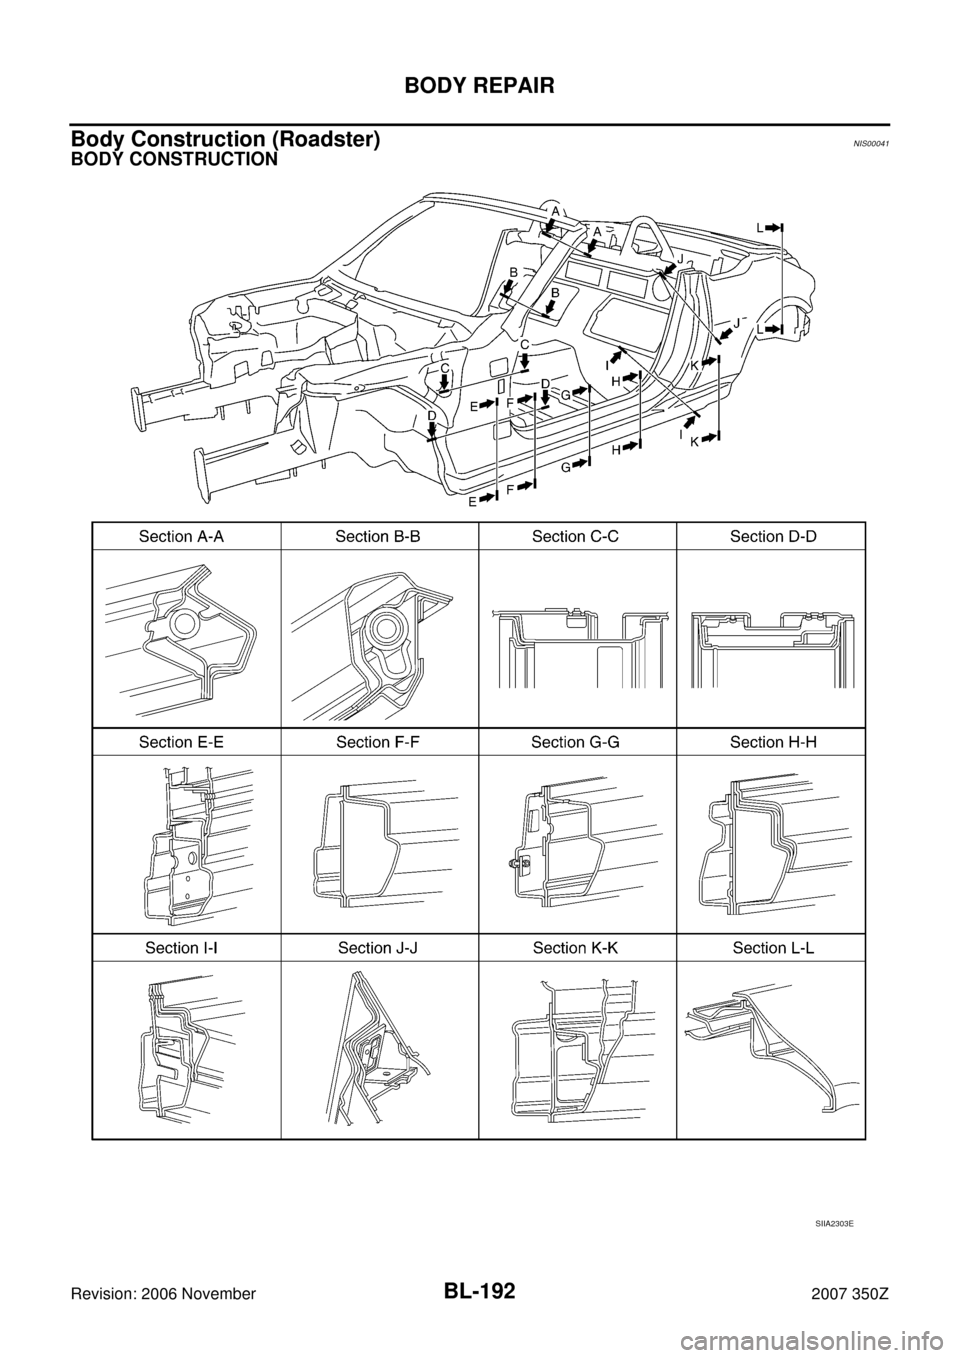 NISSAN 350Z 2007 Z33 Body, Lock And Security System Workshop Manual BL-192
BODY REPAIR
Revision: 2006 November2007 350Z
Body Construction (Roadster)NIS00041
BODY CONSTRUCTION
SIIA2303E 